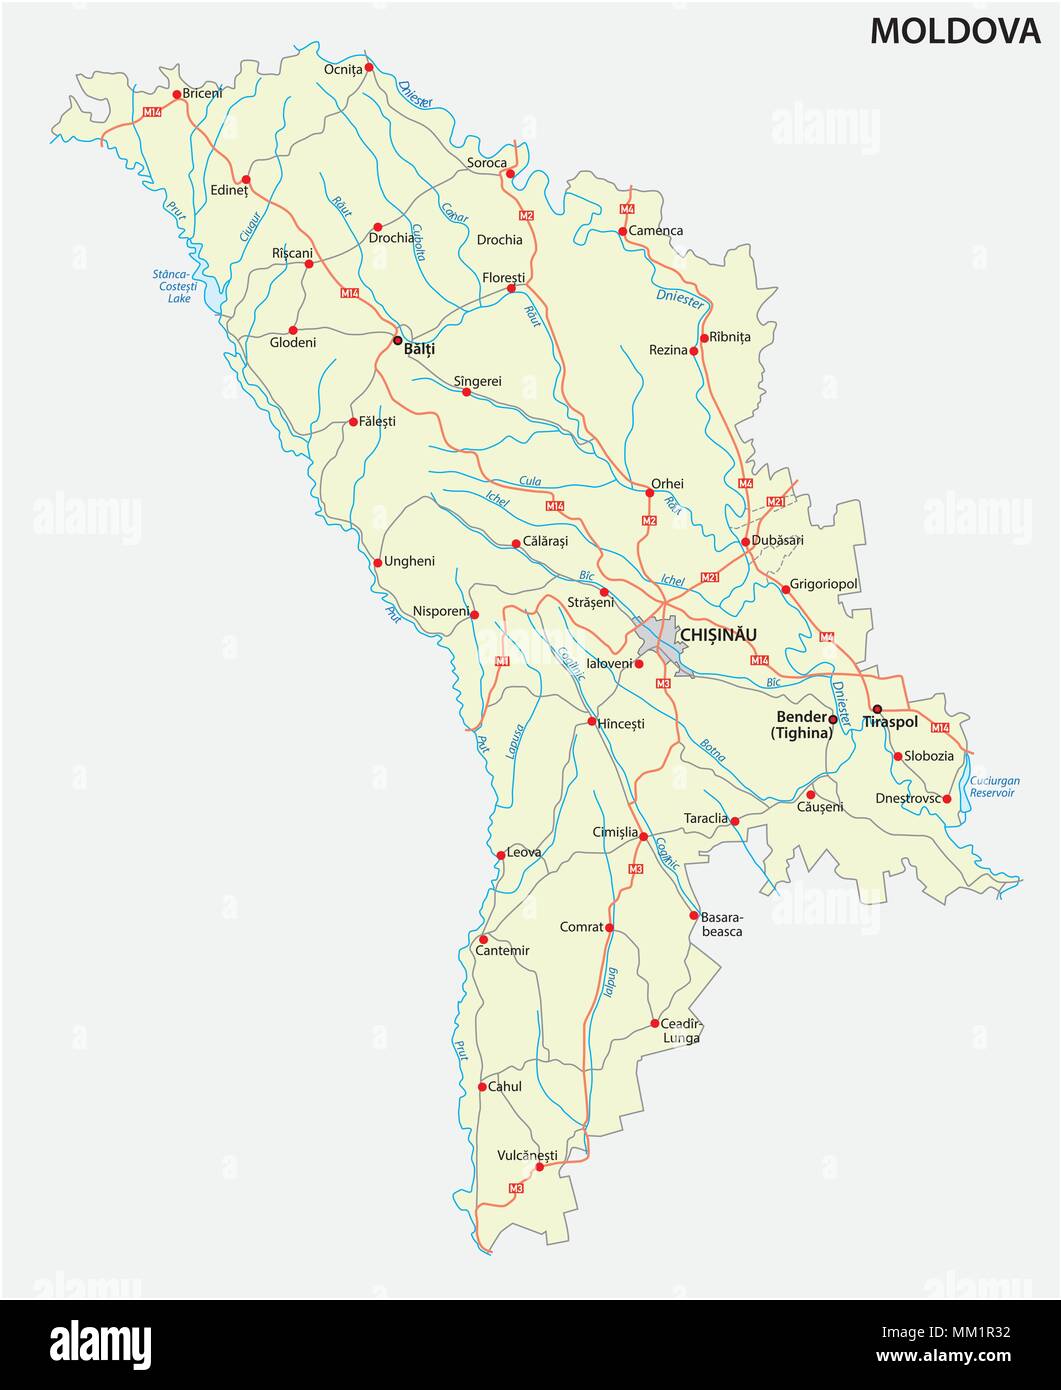 moldova road vector map Stock Vector